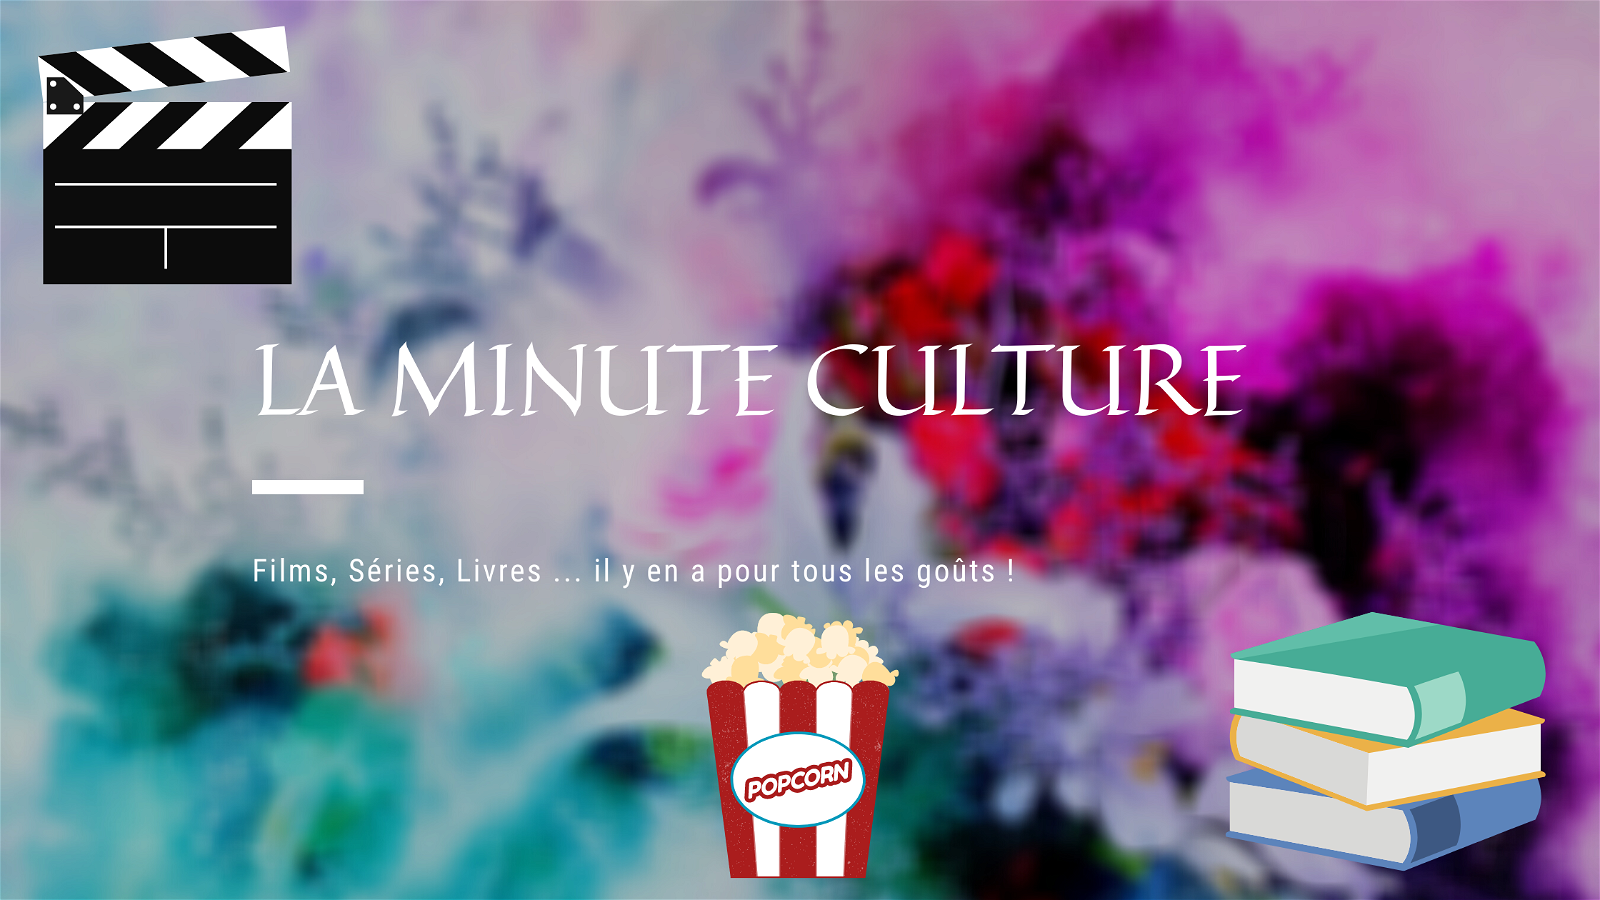 La minute culture - épisode 1